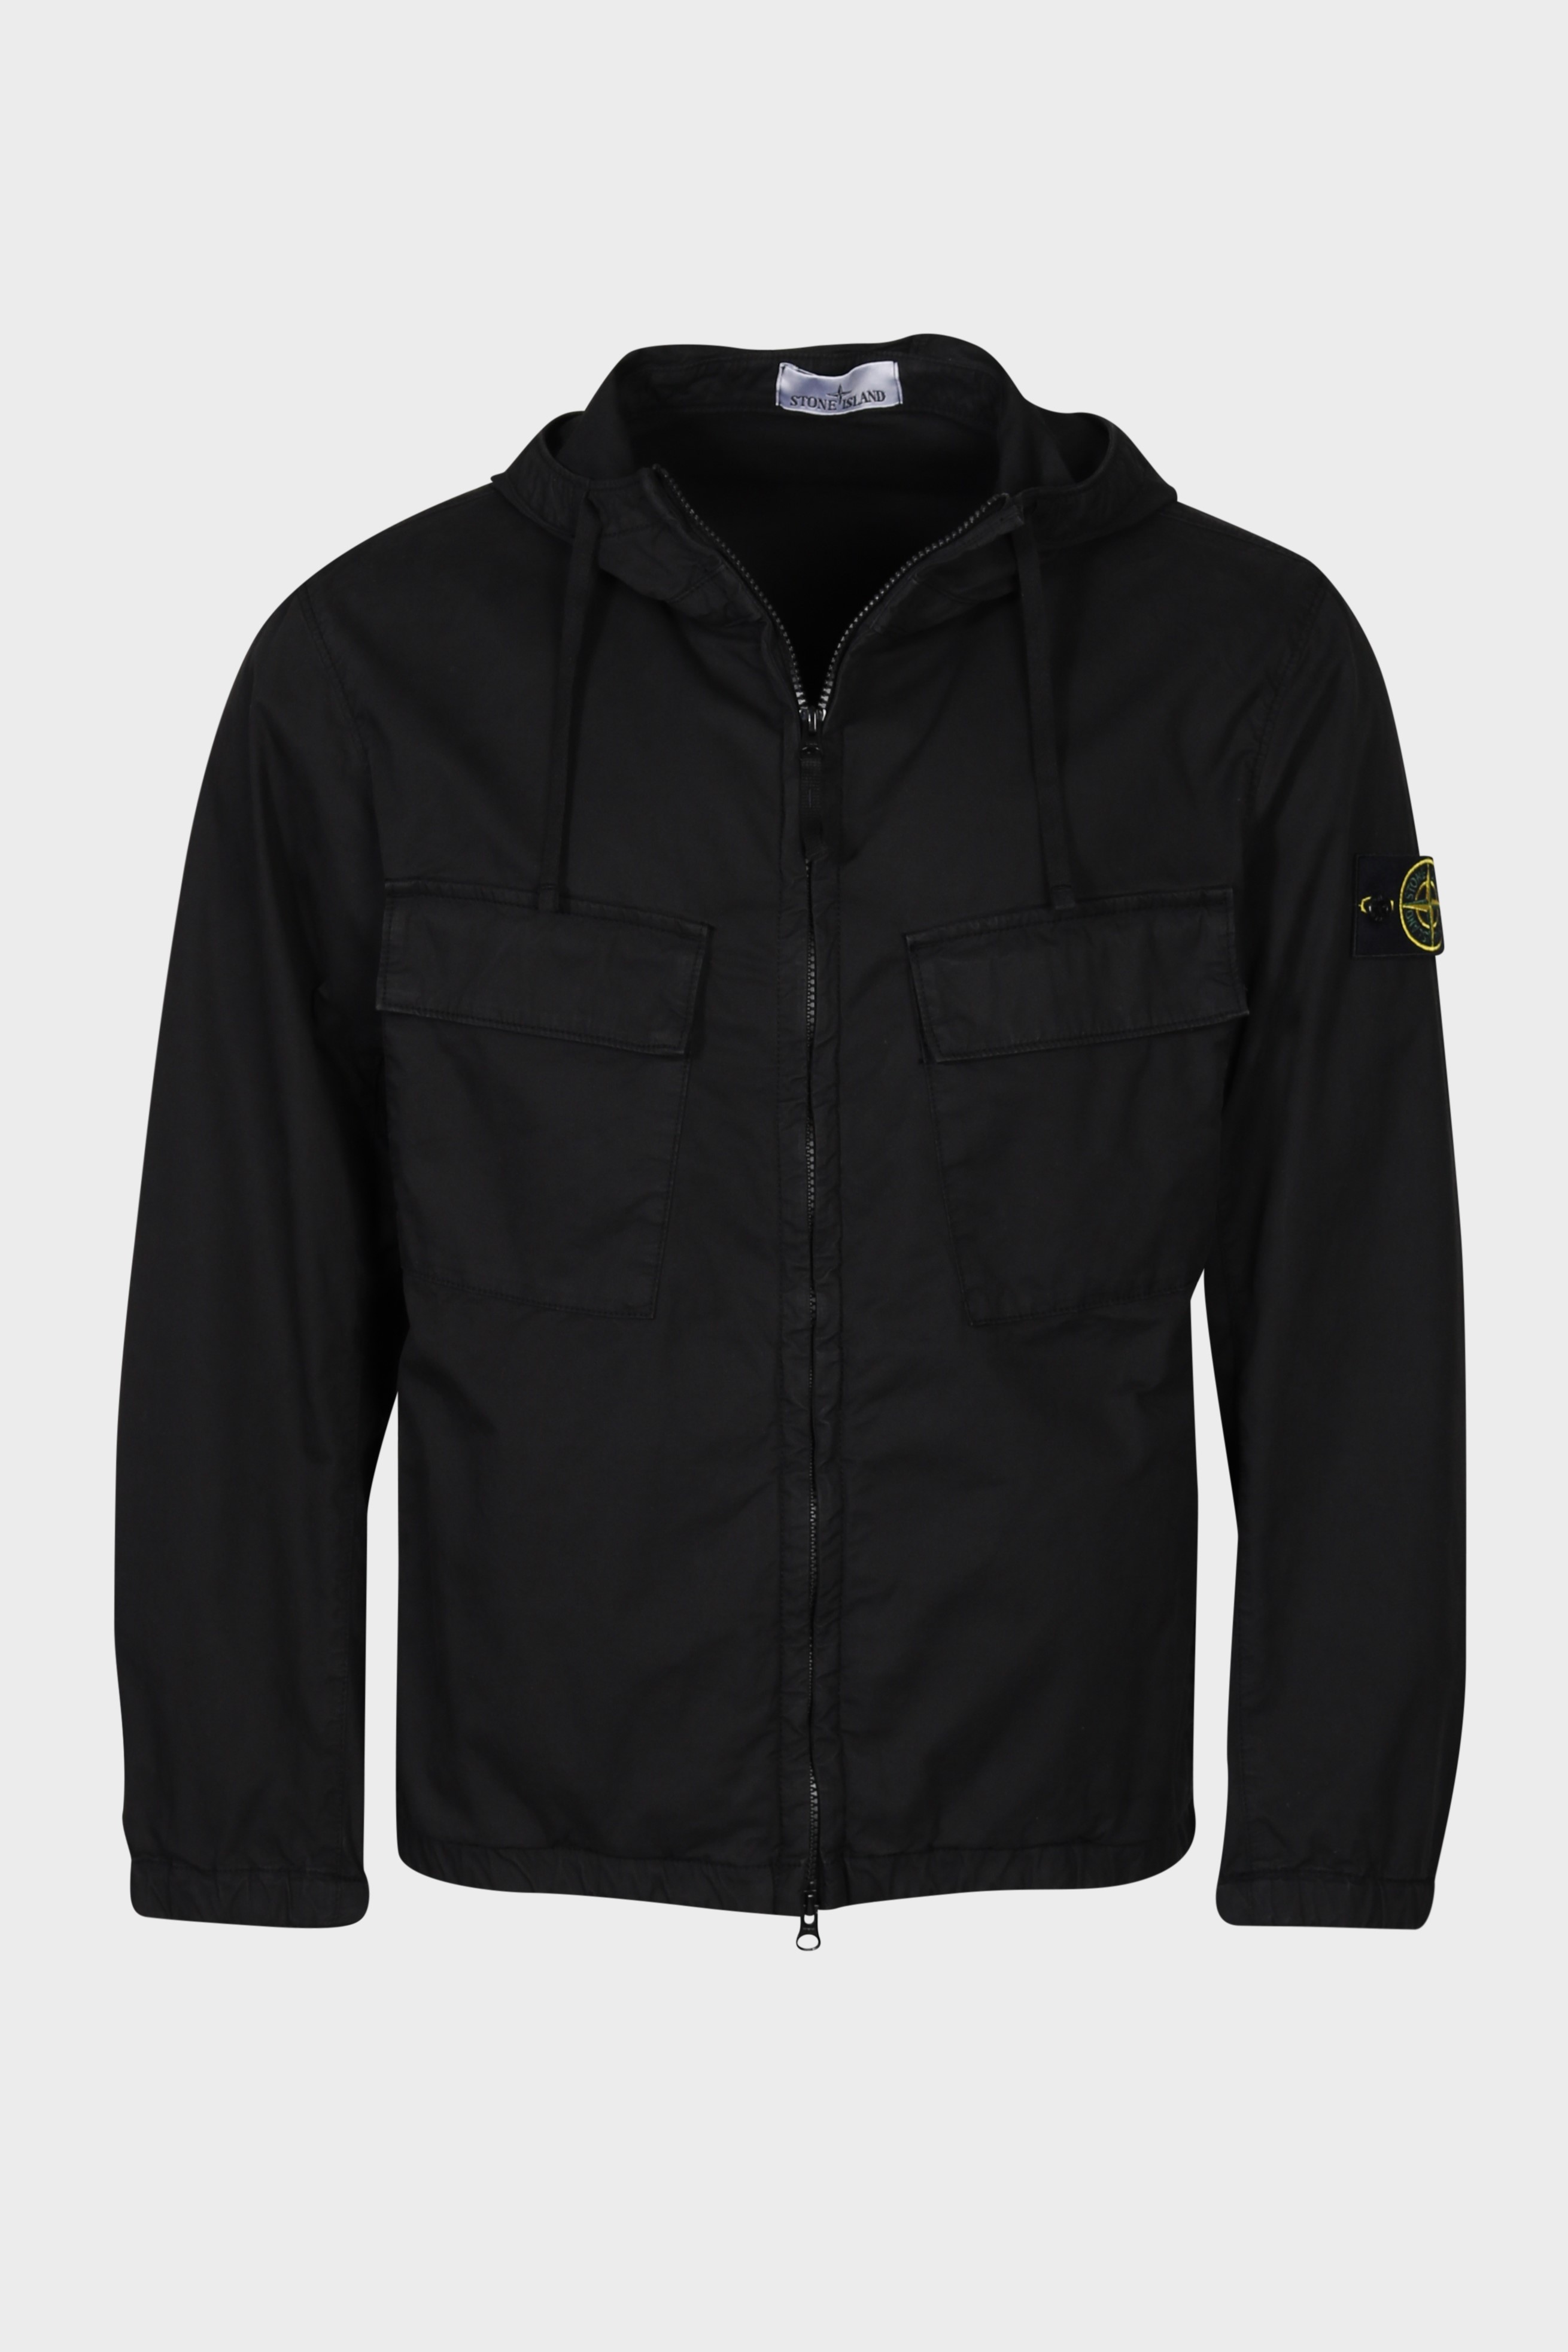 STONE ISLAND Supima® Cotton Twill Jacket in Black